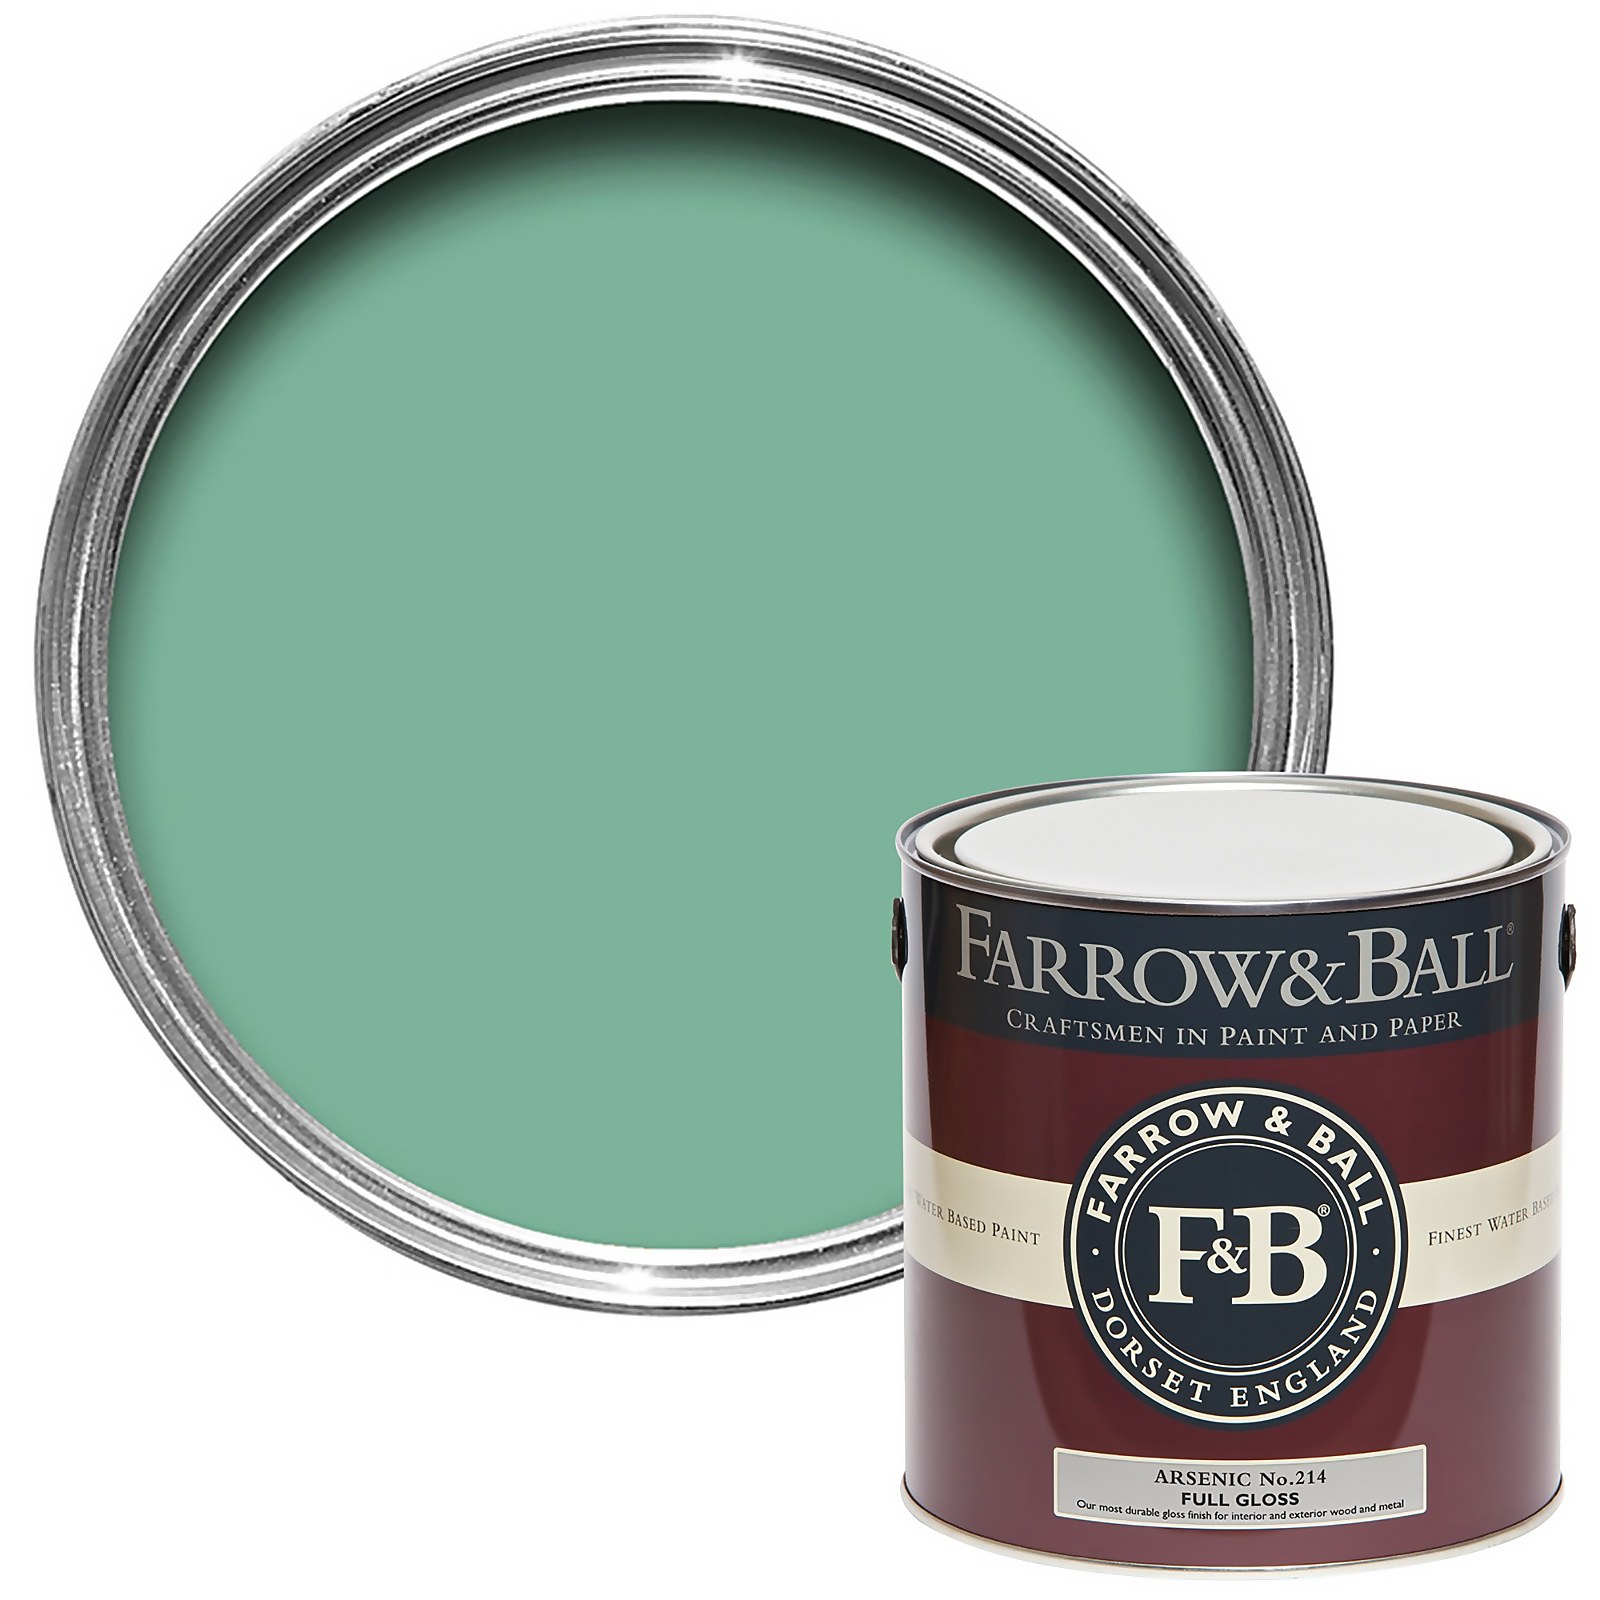 Farrow & Ball Full Gloss Arsenic No.214 - 2.5L